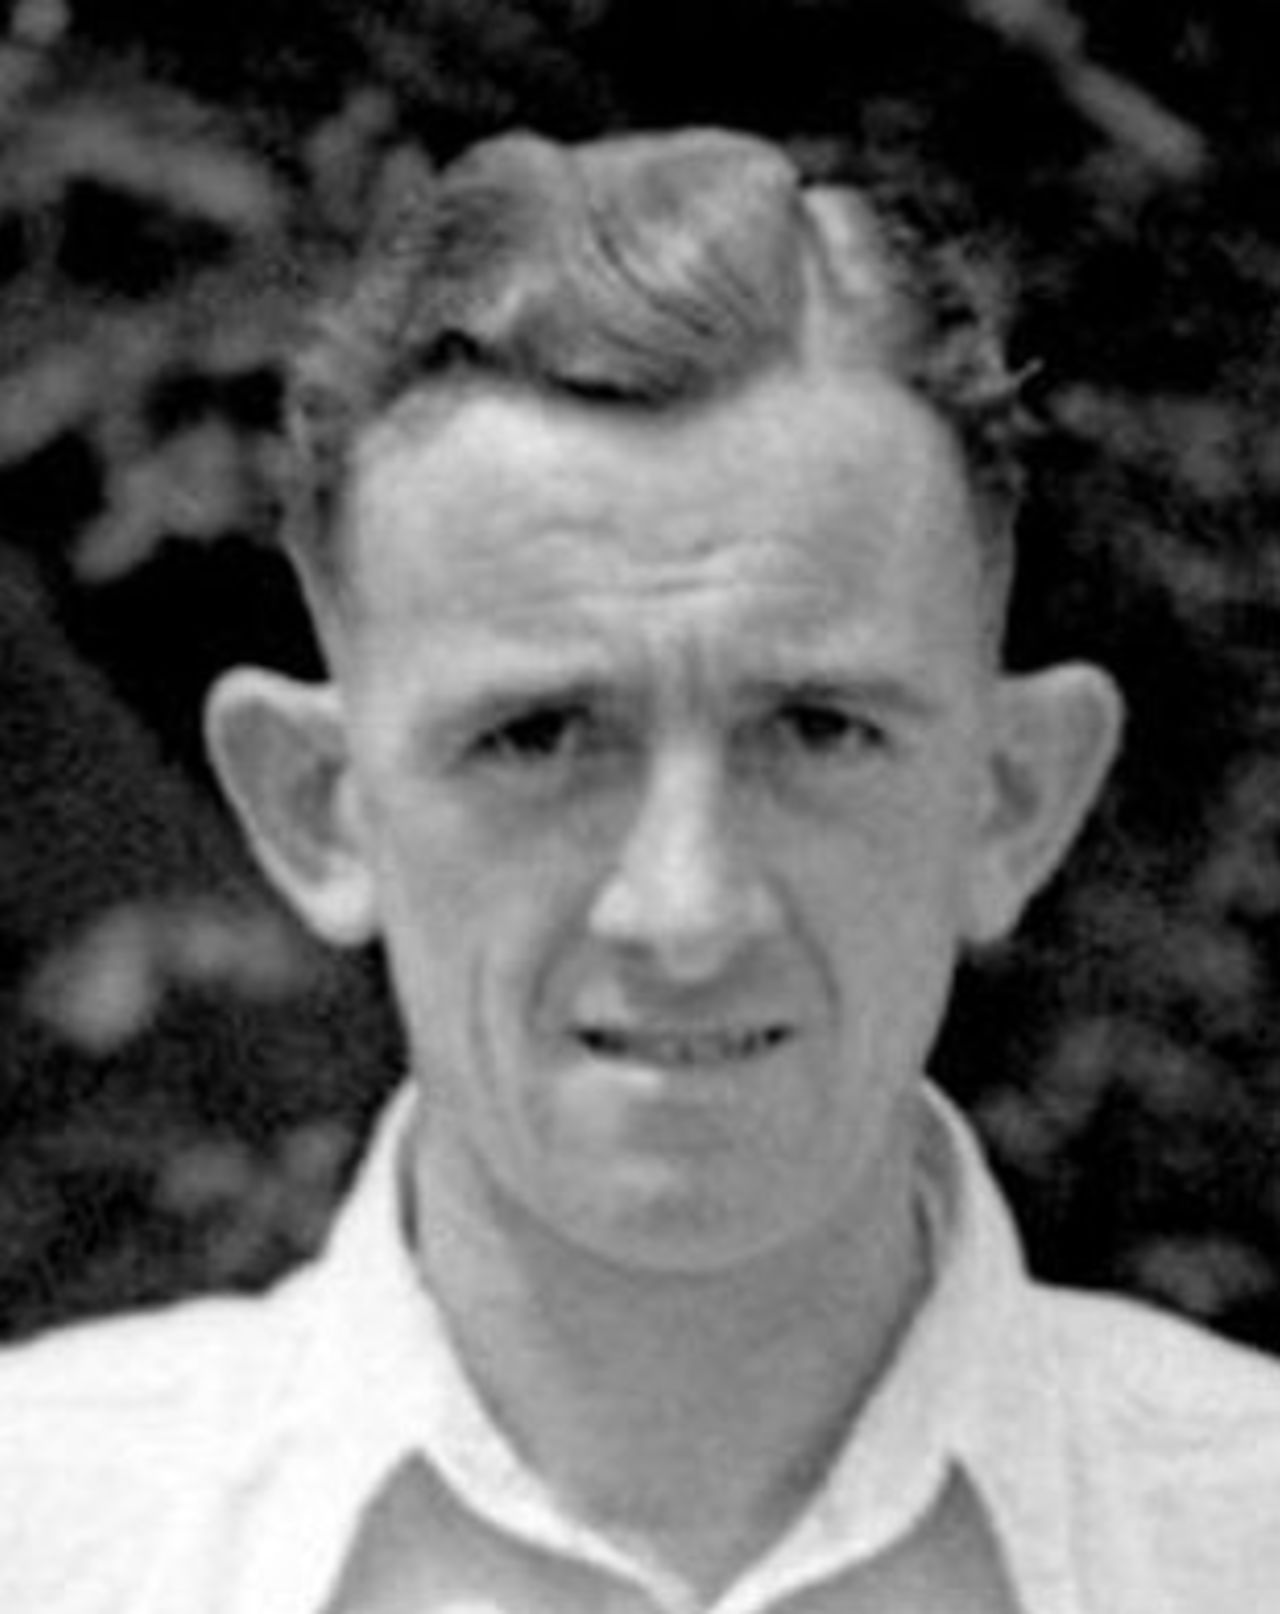 Alec Coxon at Lord's in 1948